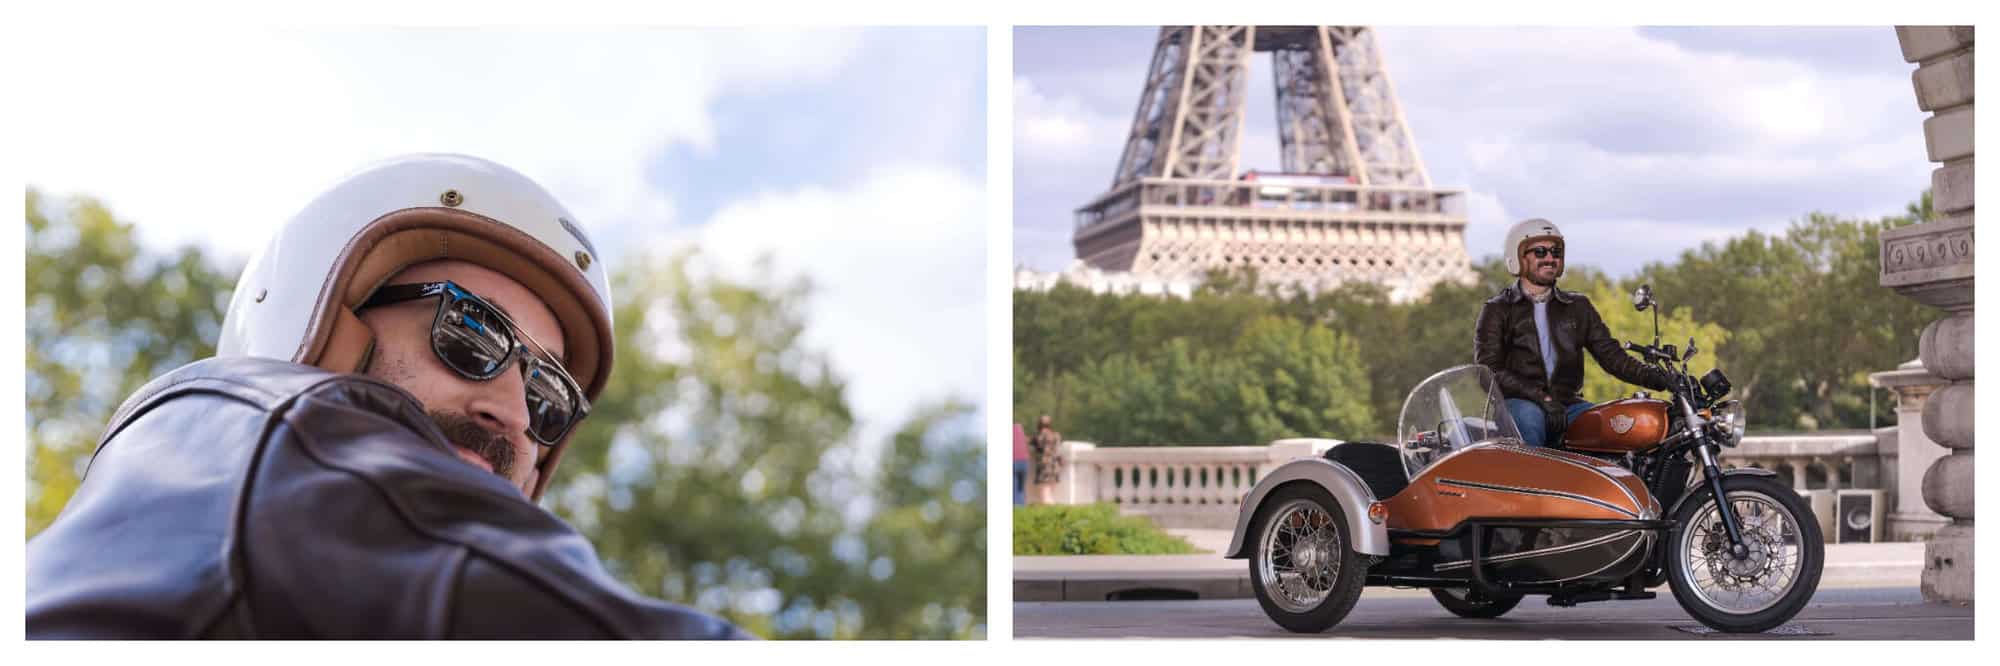 Simon Burke riding his motorcycle near the Eiffel Tower.